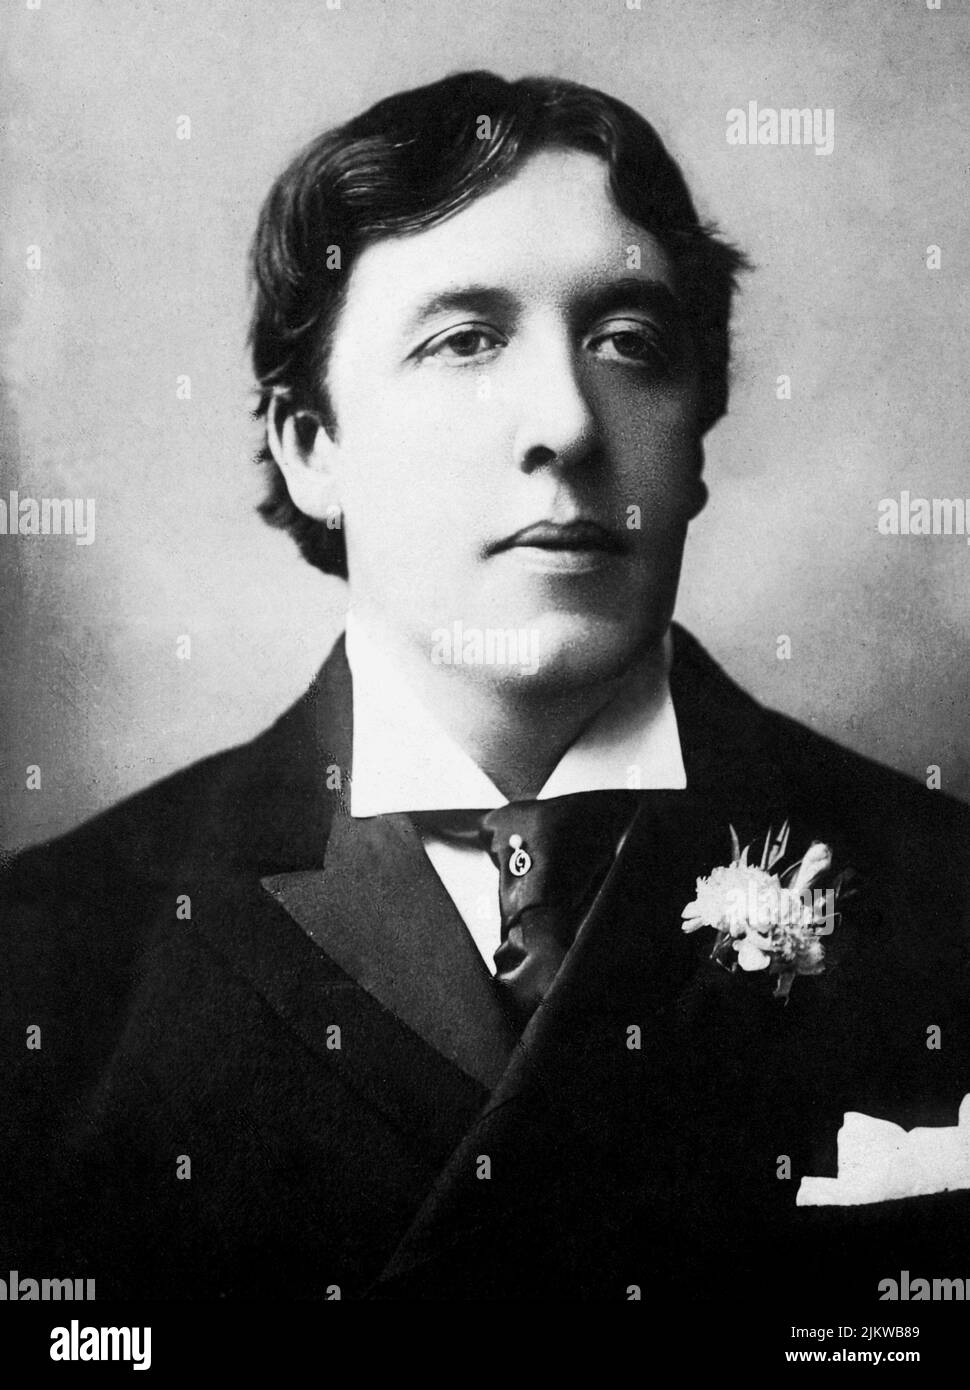 1892  : The  celebrated irish writer and dramatist OSCAR WILDE ( 1854 - 1900 ).   - SCRITTORE - LETTERATURA - LITERATURE - POET - POETA - POESIA - DRAMMATURGO - playwriter - play-writer - TEATRO - THEATER - THEATRE  - POETRY  - GAY - HOMOSEXUAL - HOMOSEXUALITY - omosessuale - omosessualità  - portrait - ritratto - green carnation - garofano verde  - tie - cravatta - collar - colletto - pin - fermacravatta ----  Archivio GBB Stock Photo